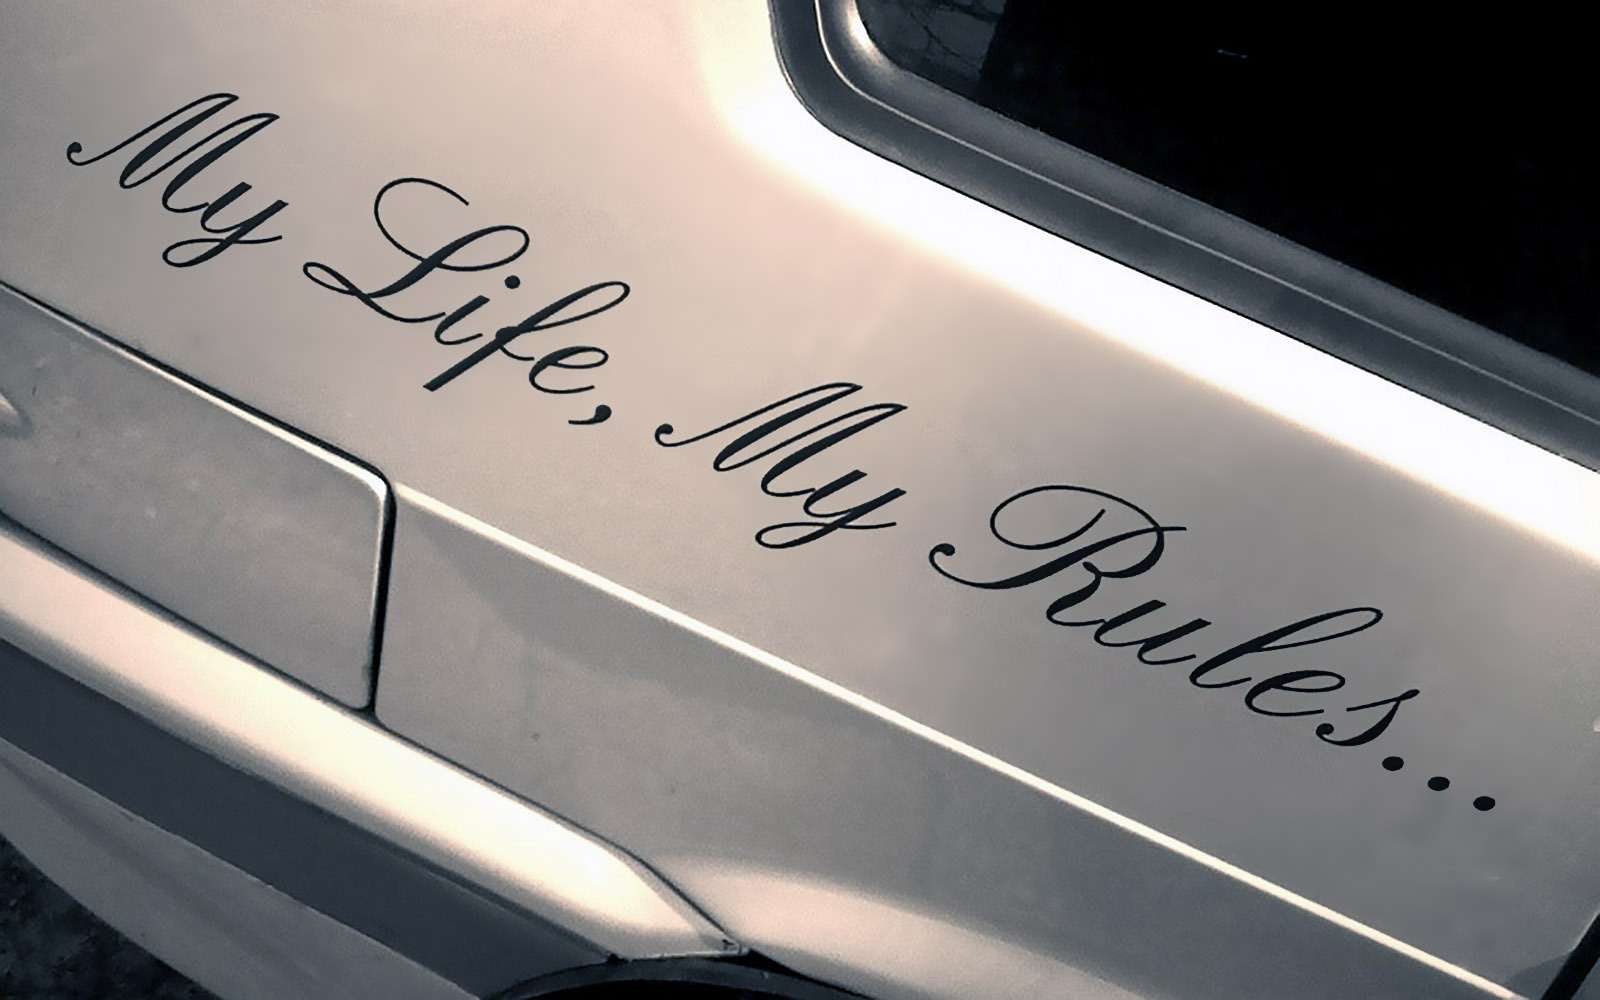 My life my room. Наклейка my Life my Rules. My Life my Rules наклейка на машину. Красивые надписи на машину. Наклейка на машину май лайф май рулез.